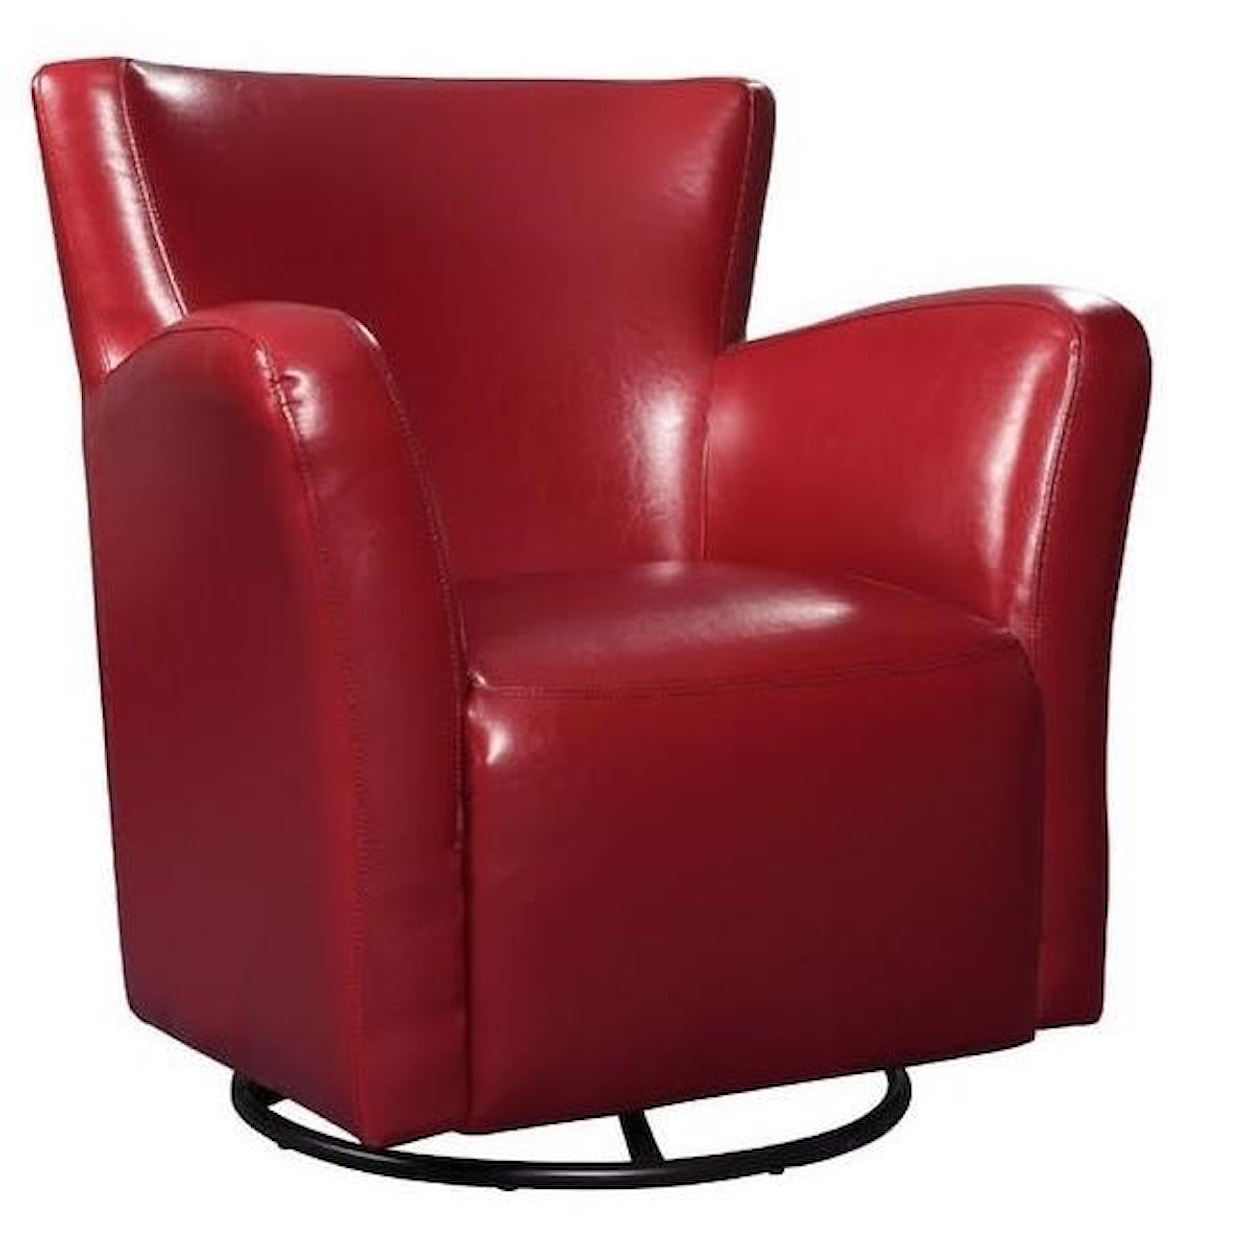 Elements International Marilyn UMV Swivel Upholstered Chair